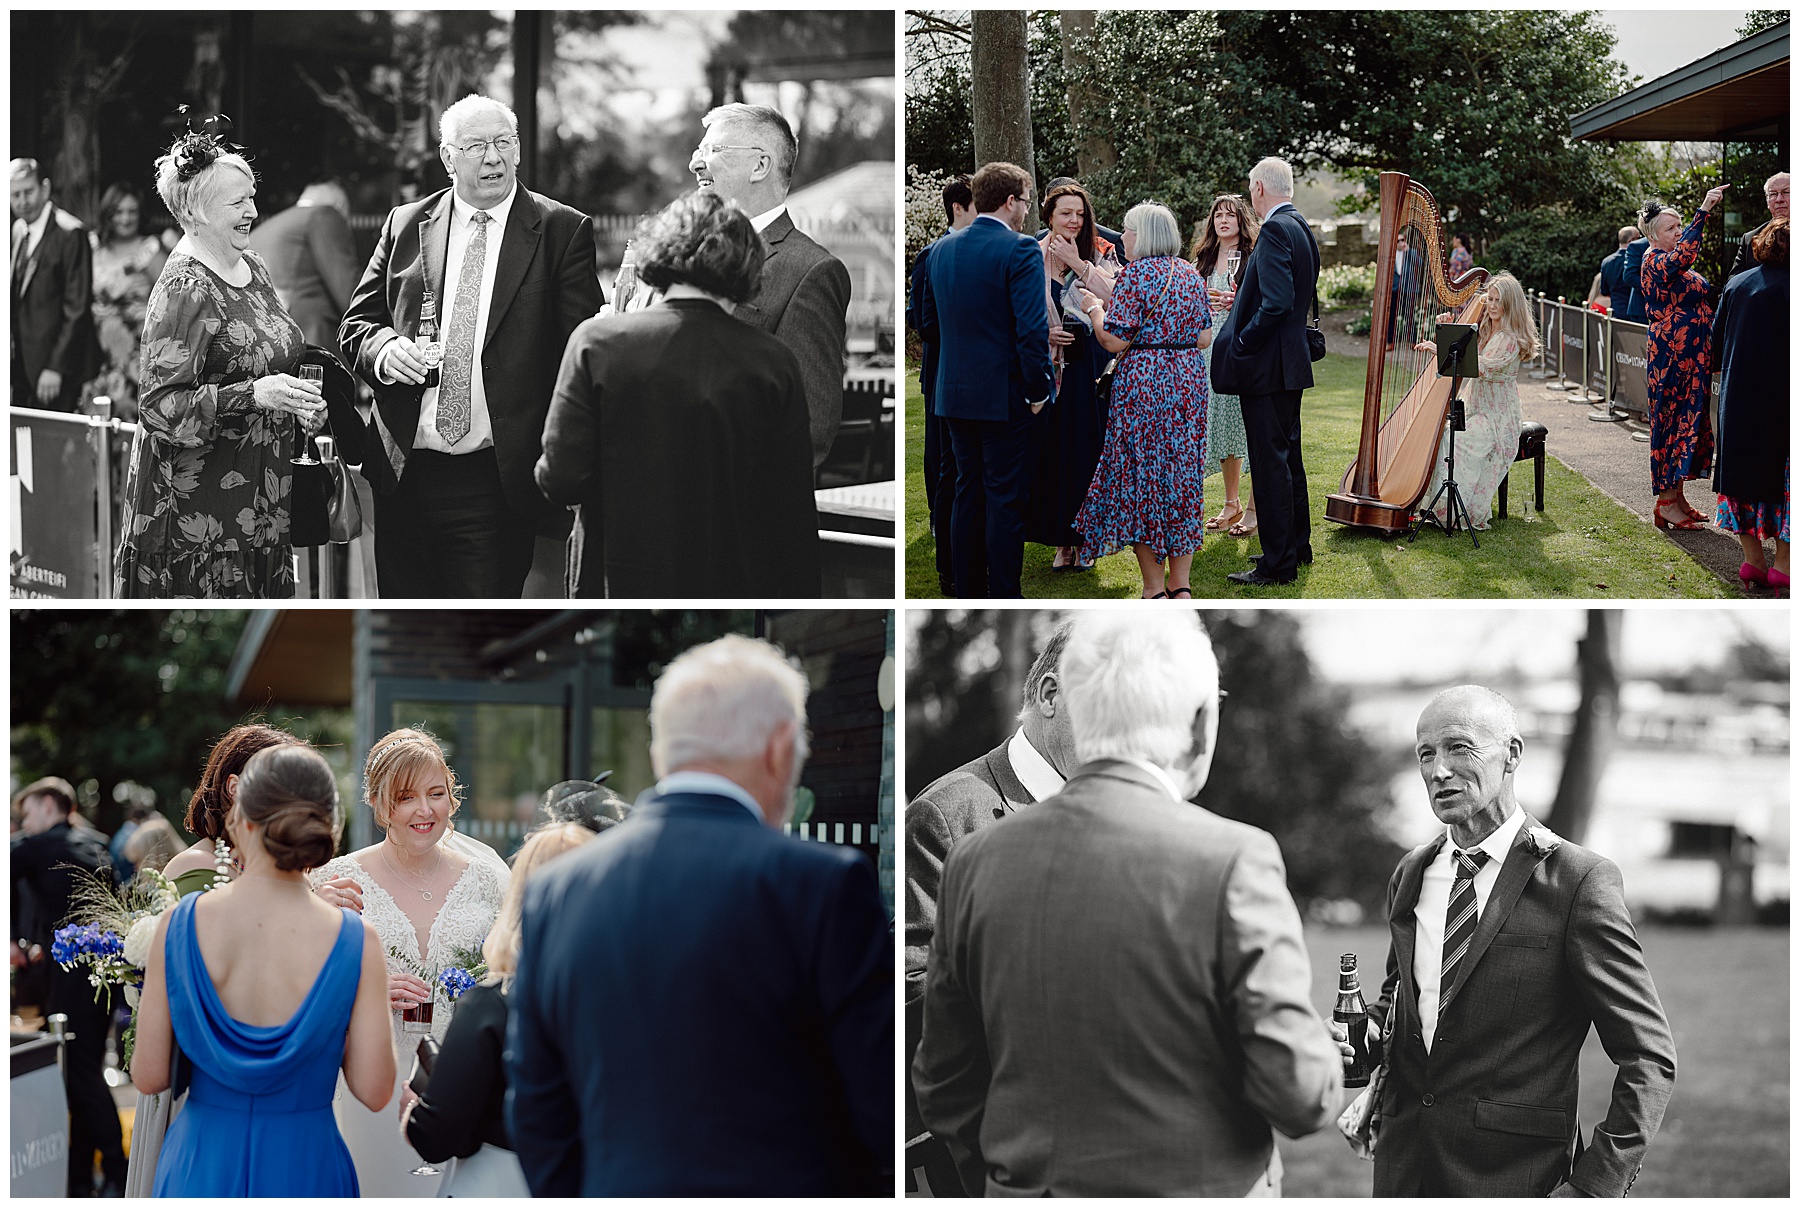 Wedding Guests Mingling at Cardigan Castle